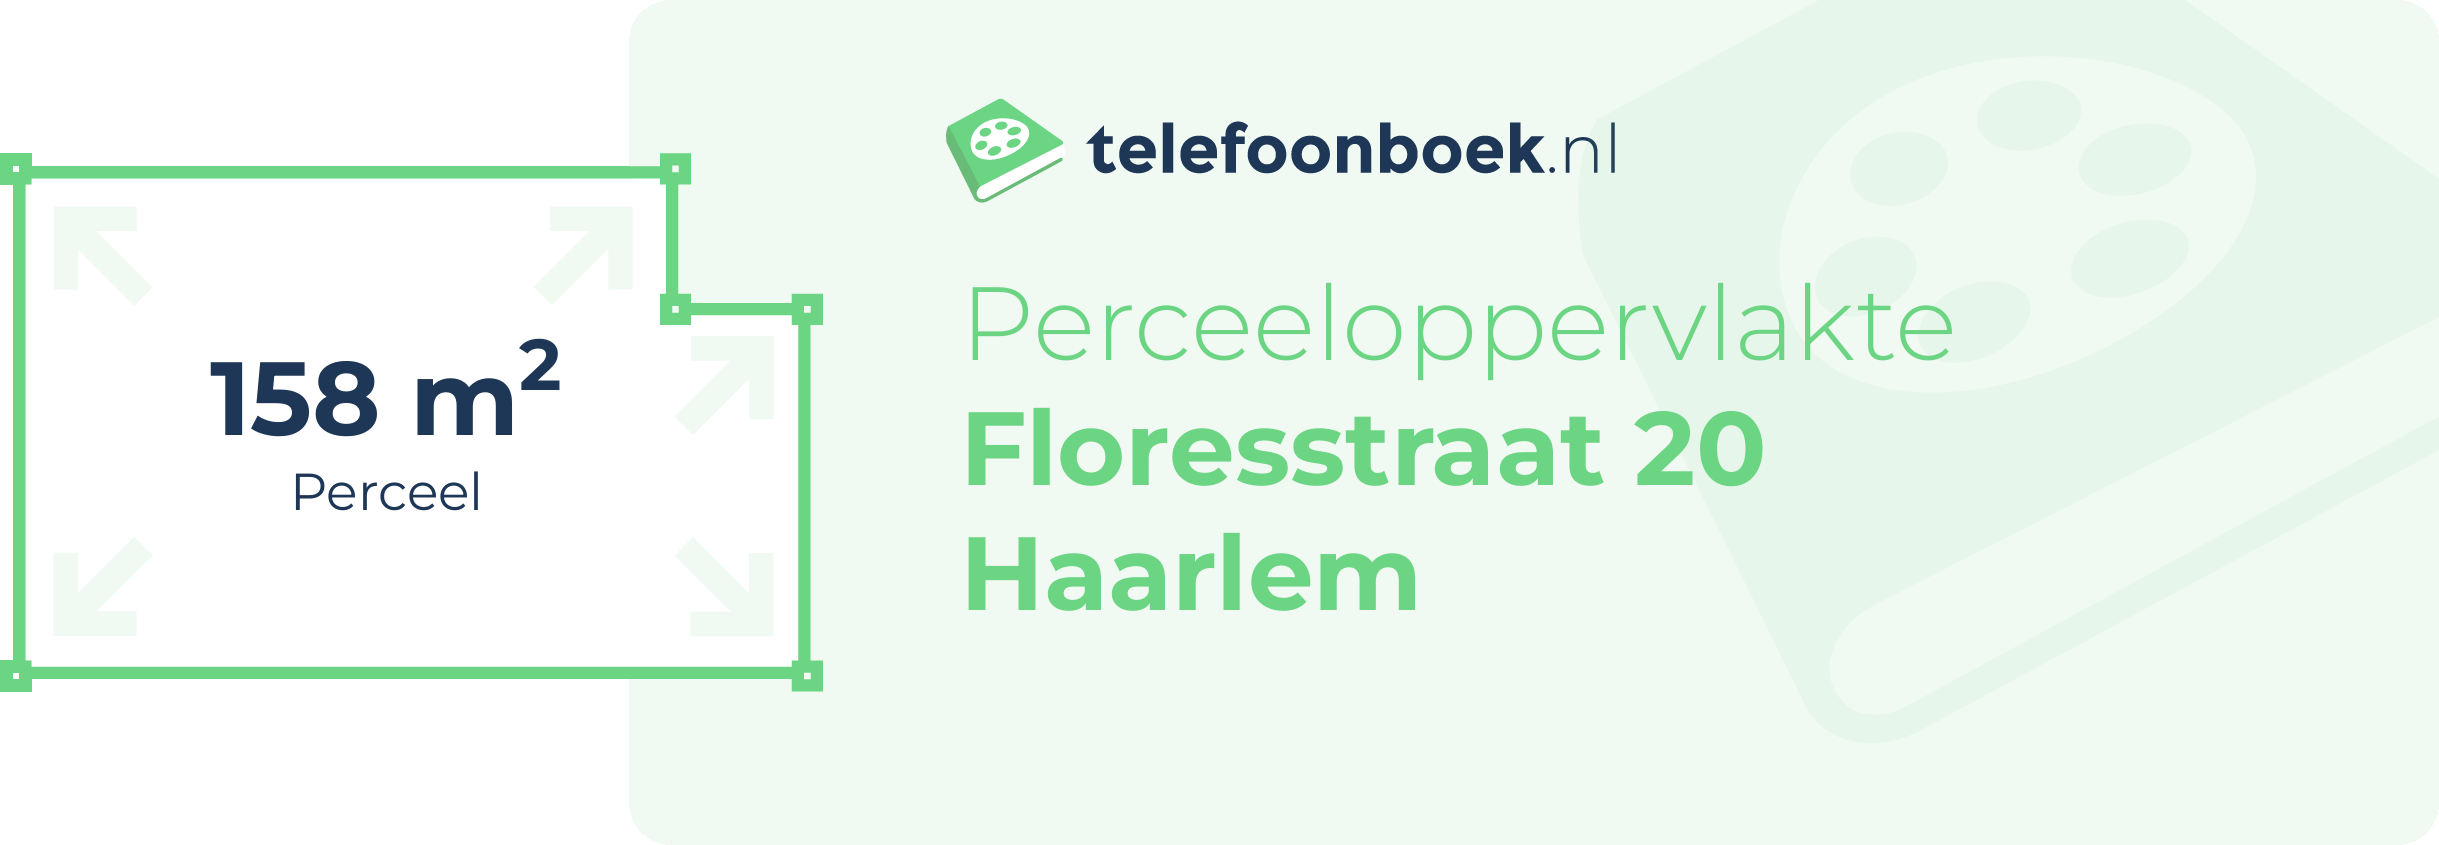 Perceeloppervlakte Floresstraat 20 Haarlem